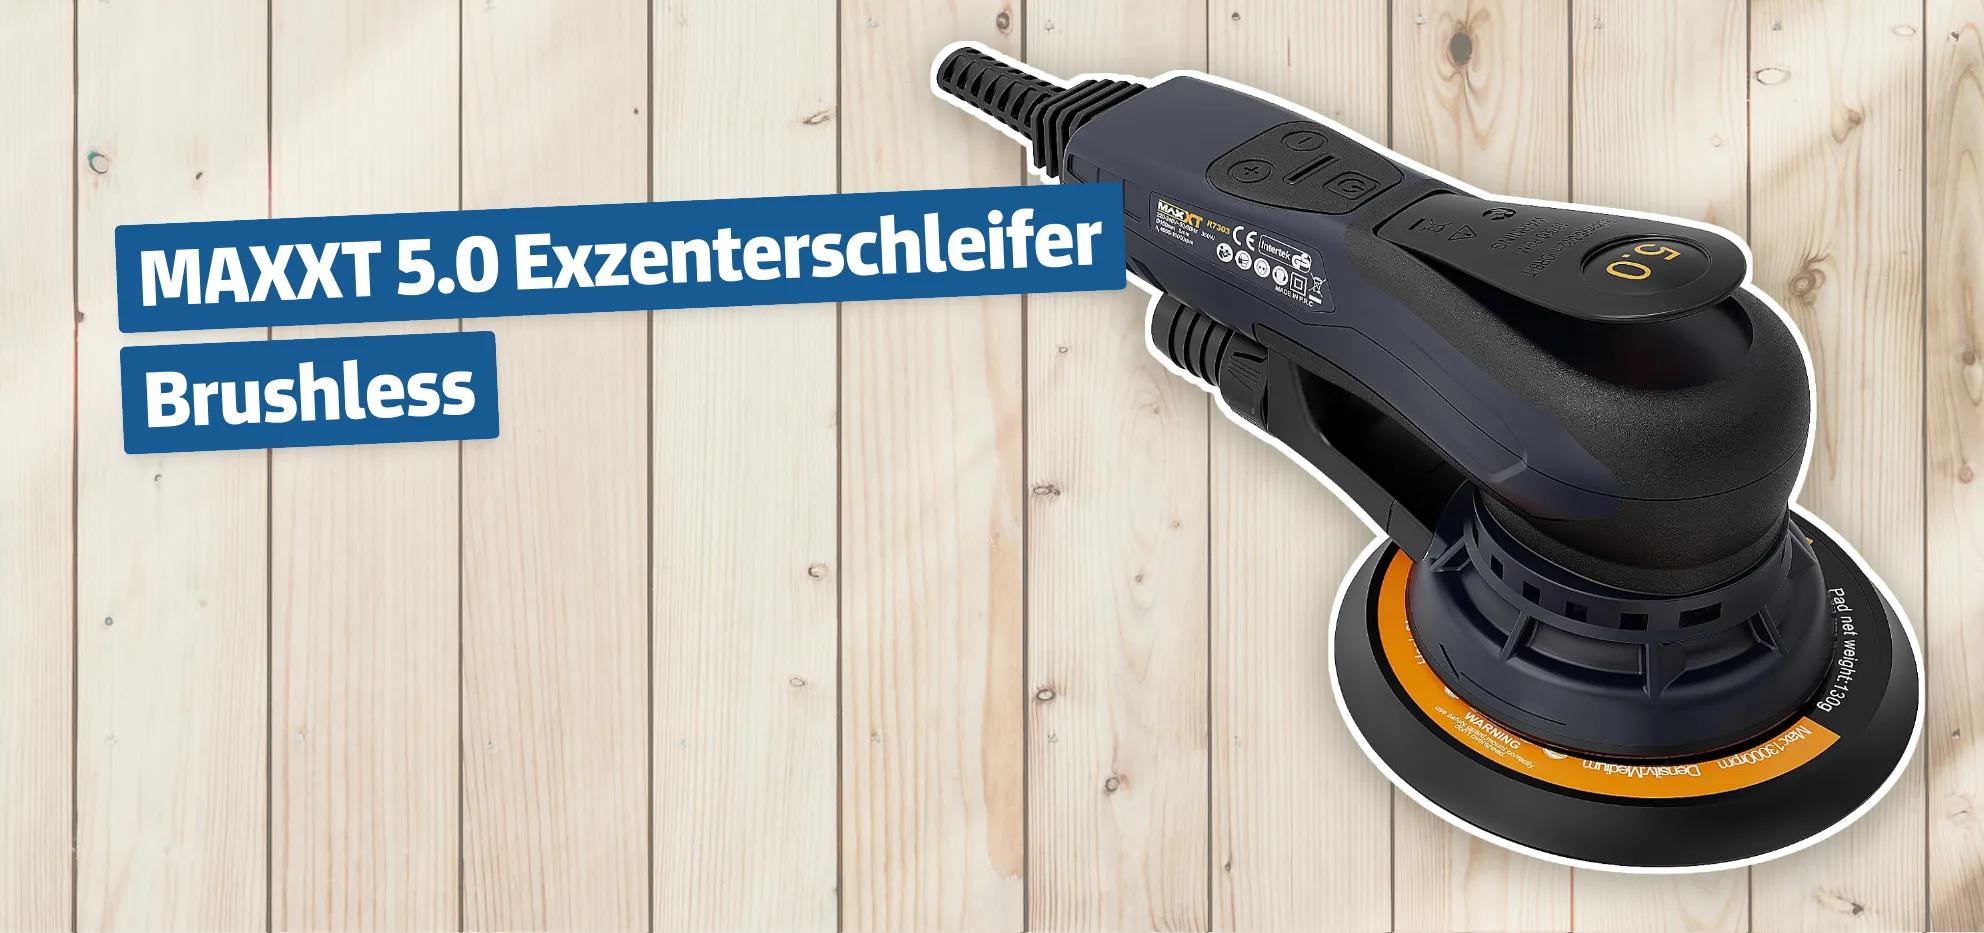 MAXXT 5.0 Exzenterschleifer Brushless